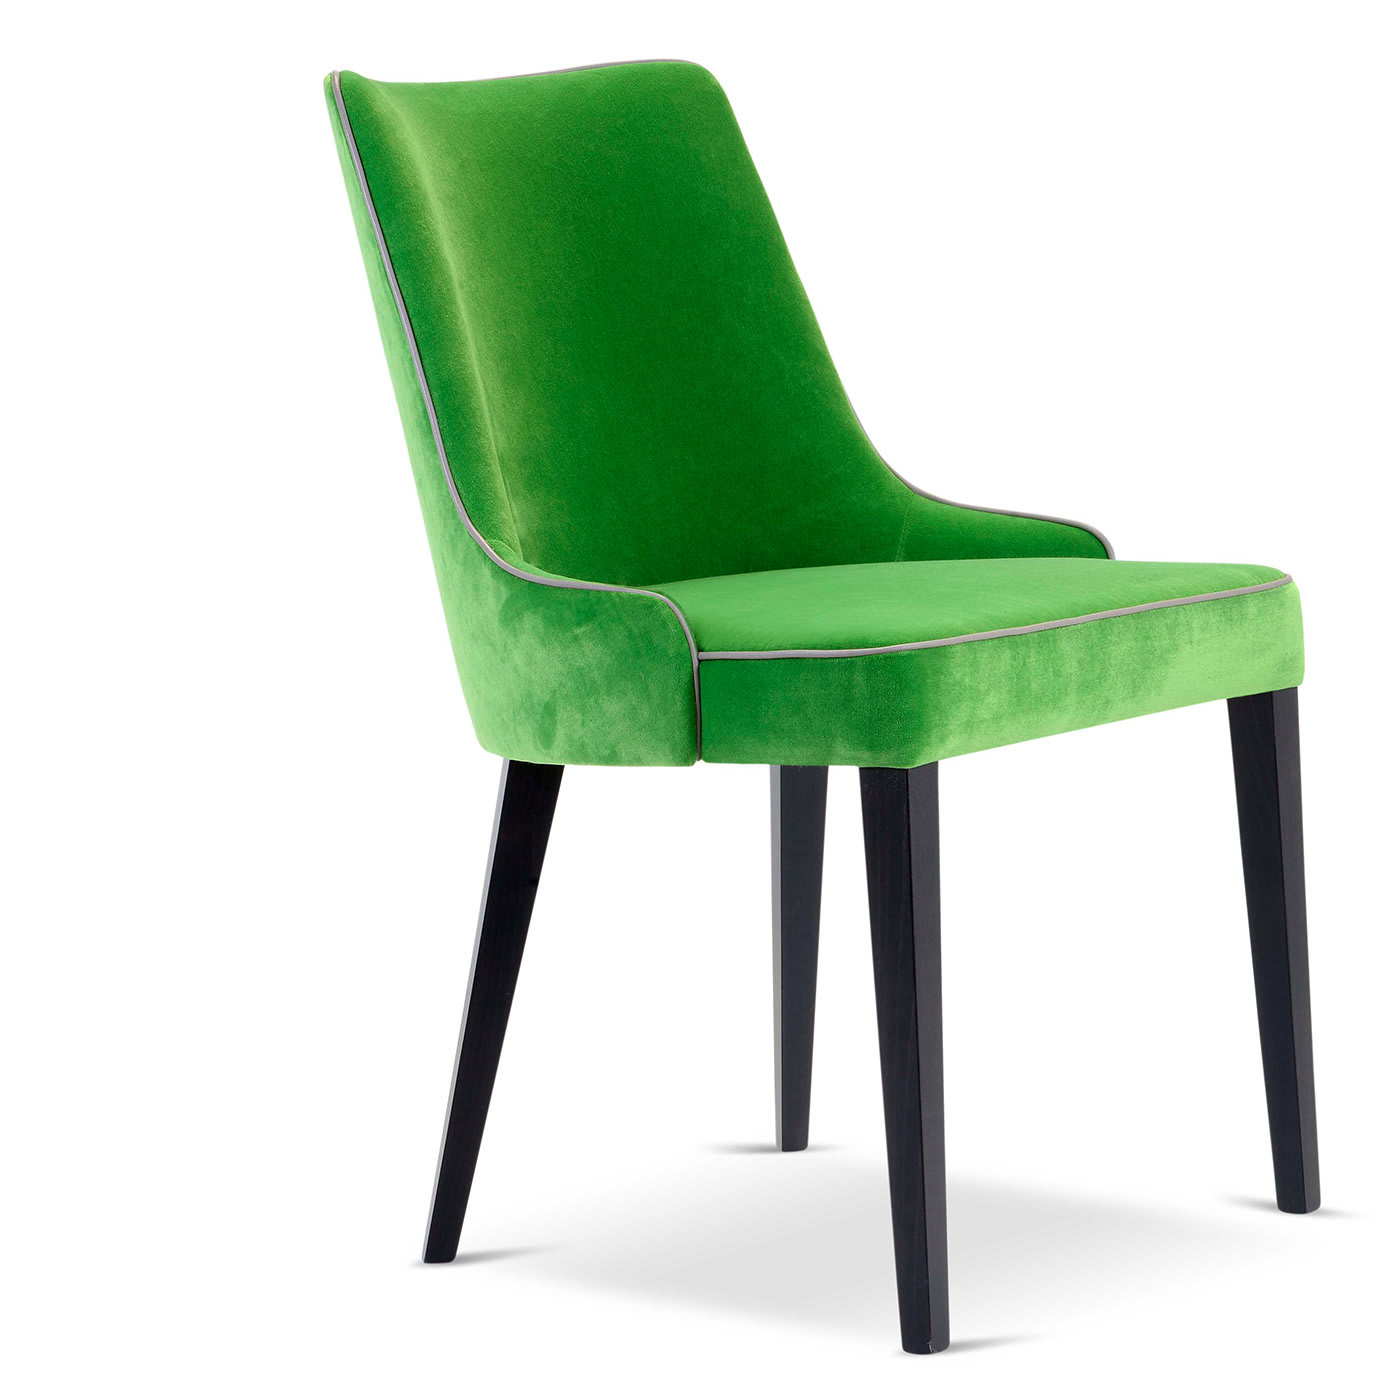 Pat Green Chair - Domingo Salotti